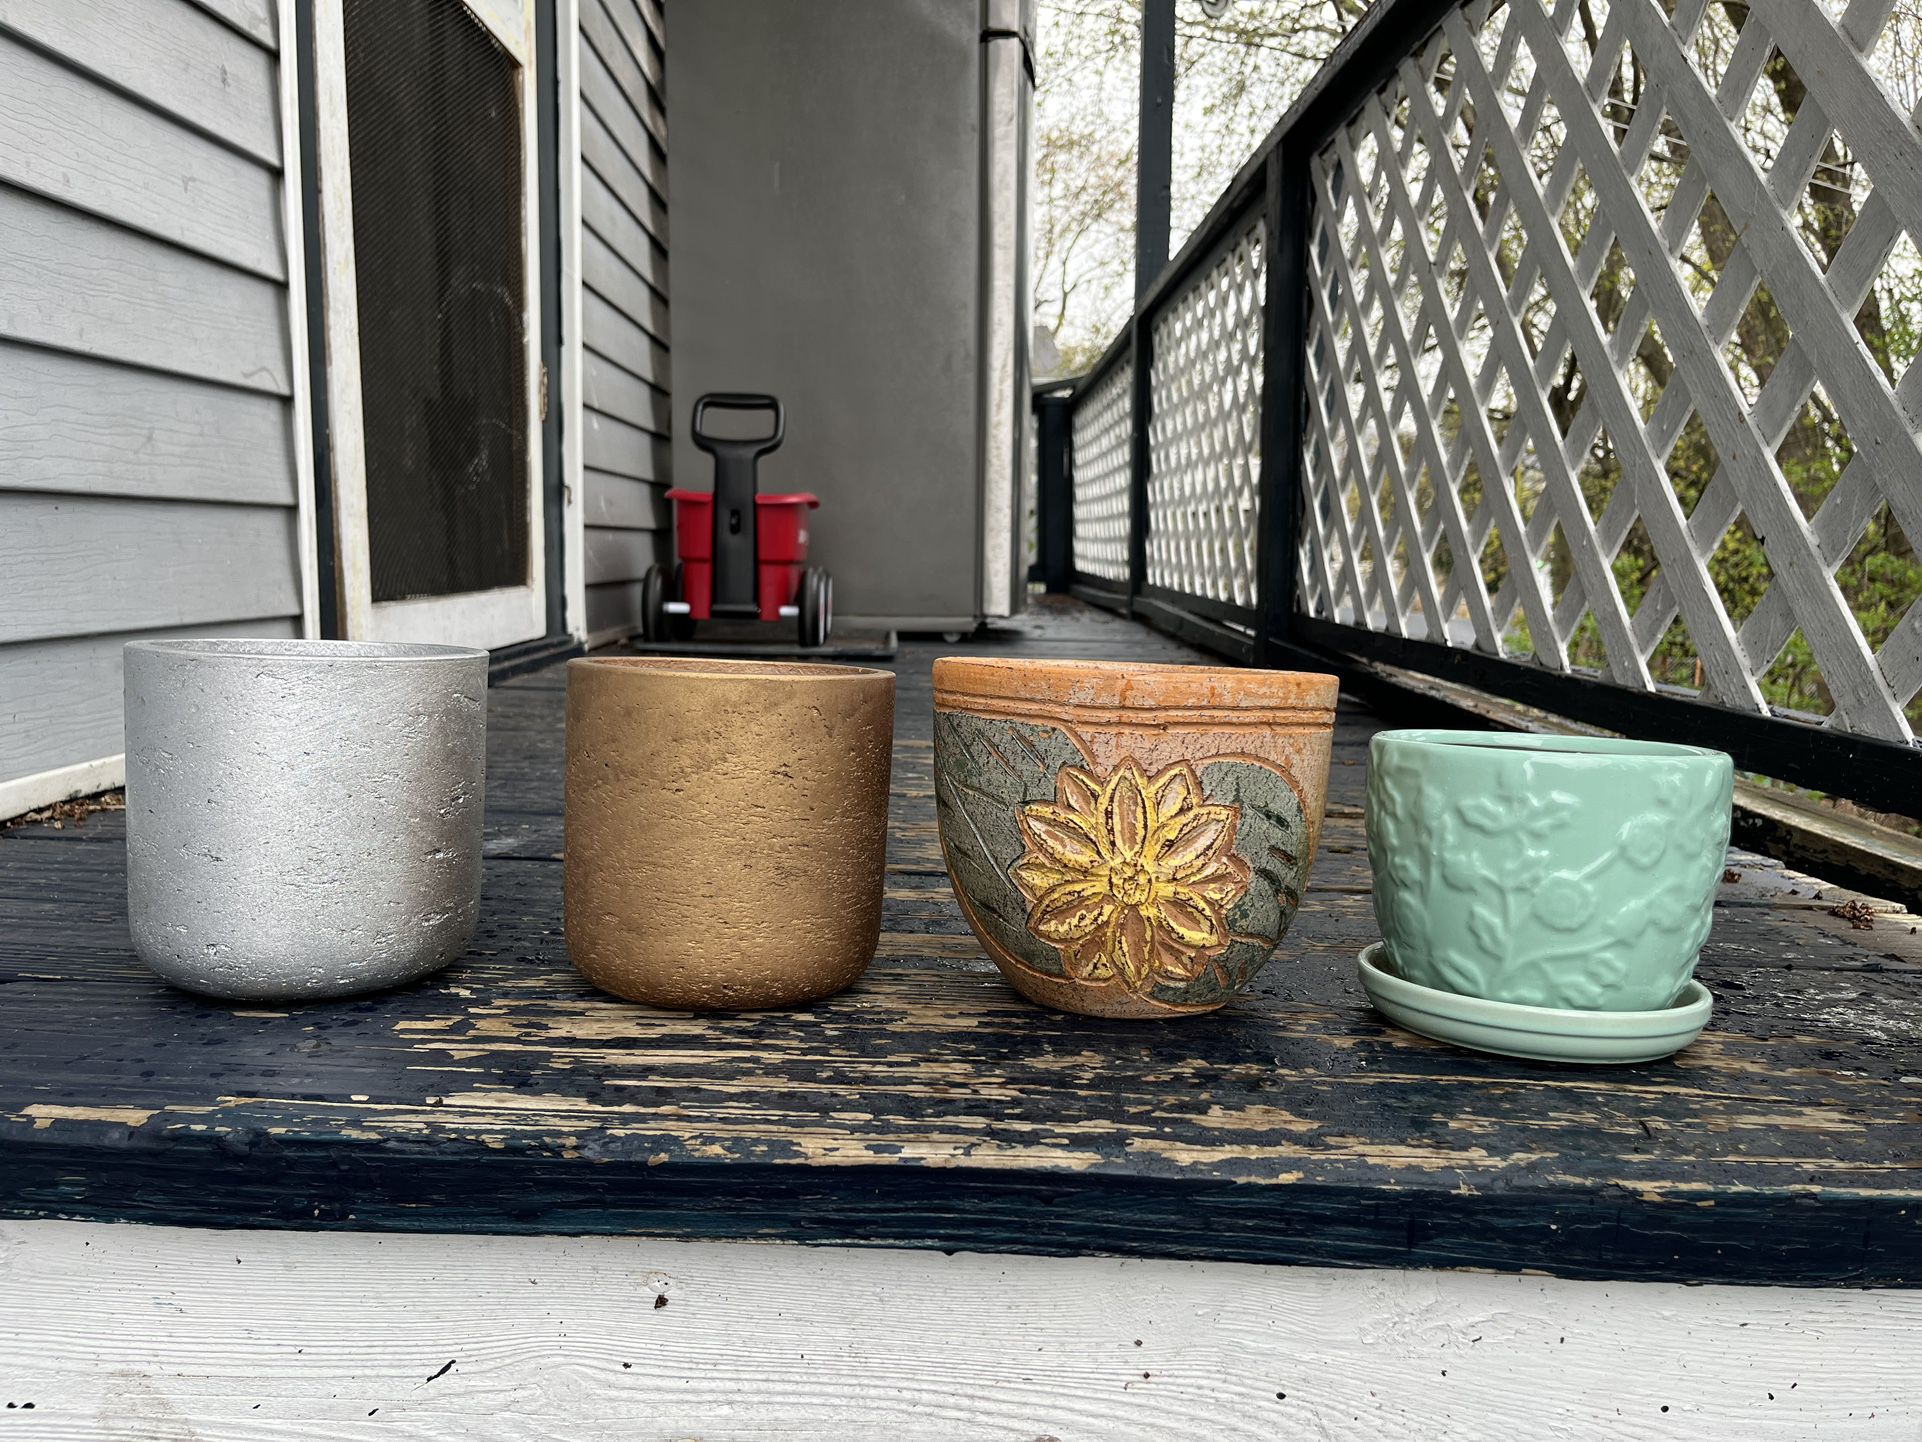 Collection Of 4 Ceramic Pota For Houseplants